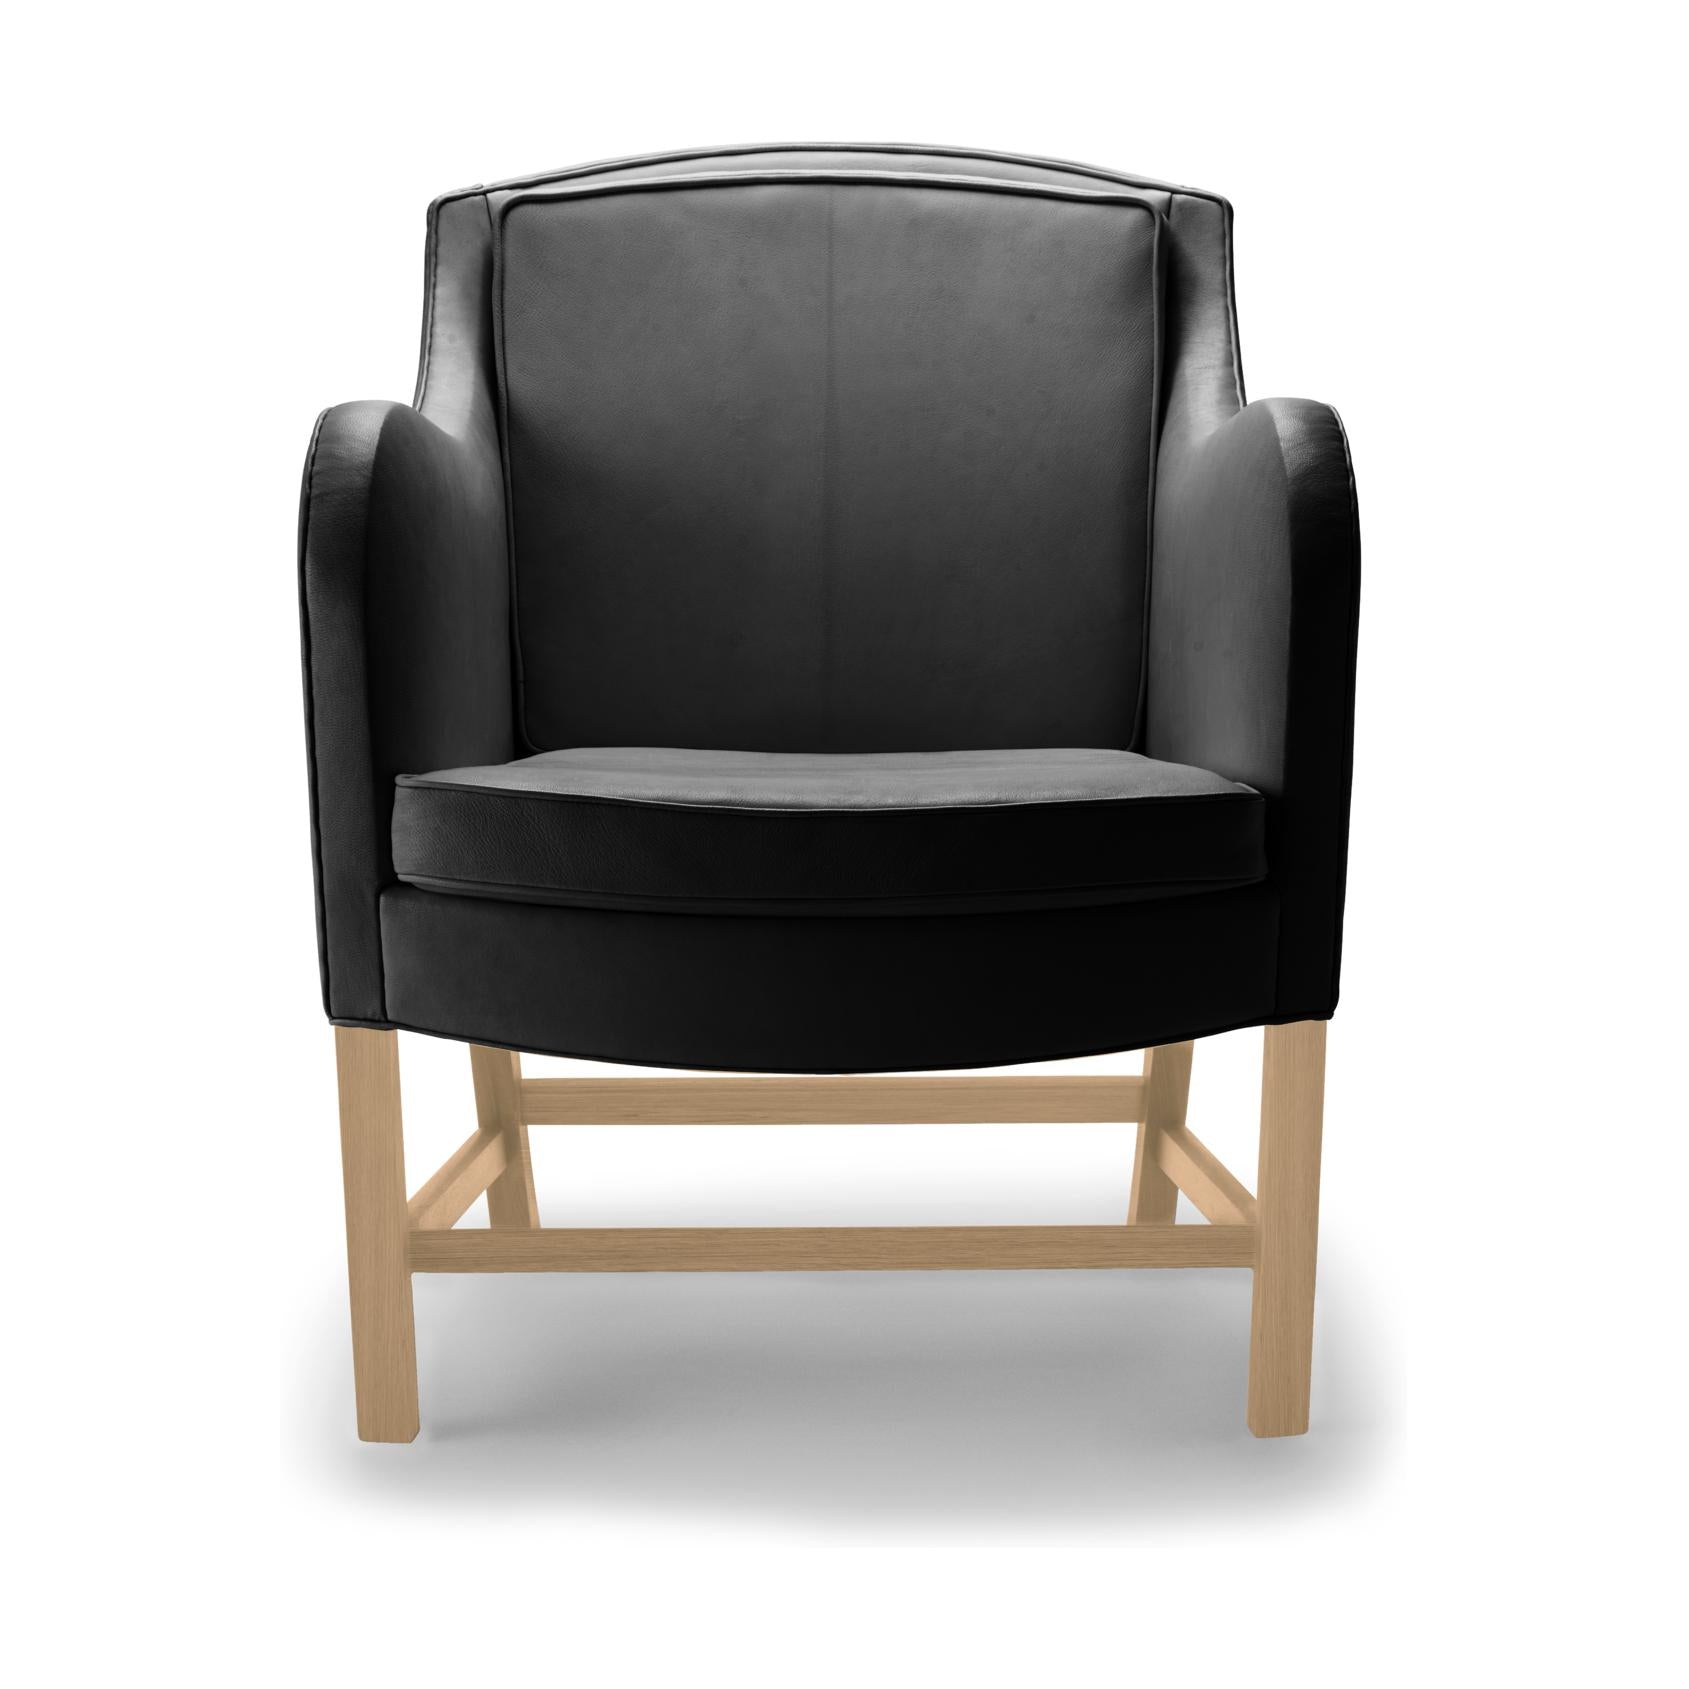 Carl Hansen Kk43960 Mix Lounge Chair, Oiled Oak/Black Leather